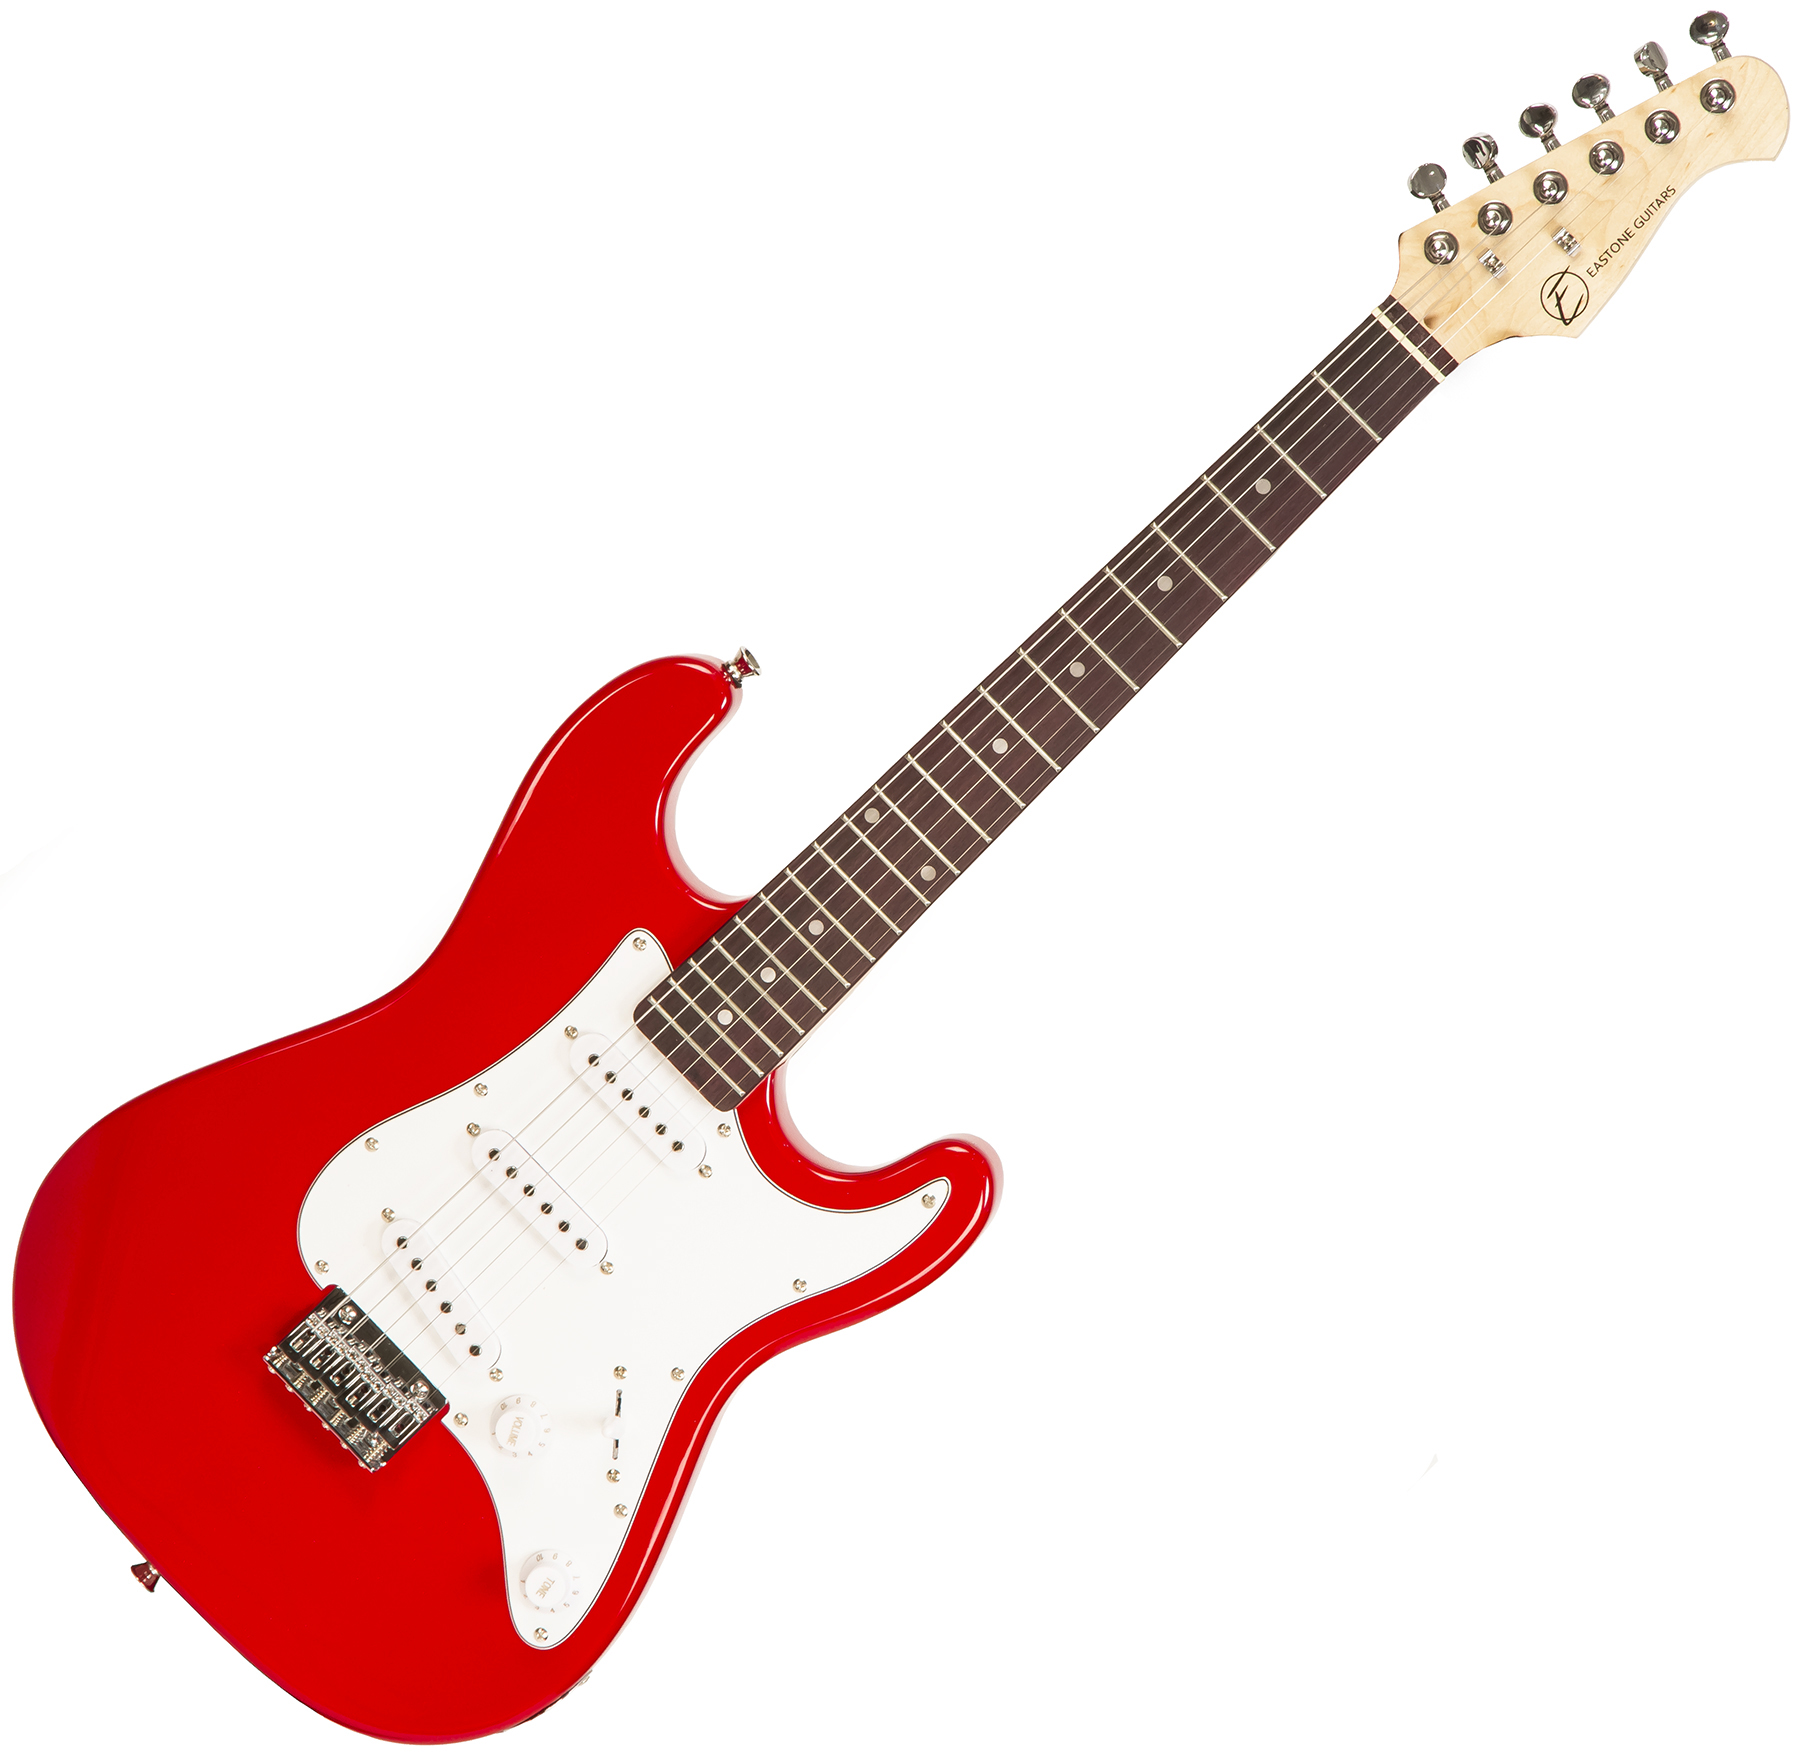 Eastone Str Mini +marshall Mg10g +cable +housse+ Courroie+ Mediators + Mg10g Gold Combo 10 W - Red - Elektrische gitaar set - Variation 1